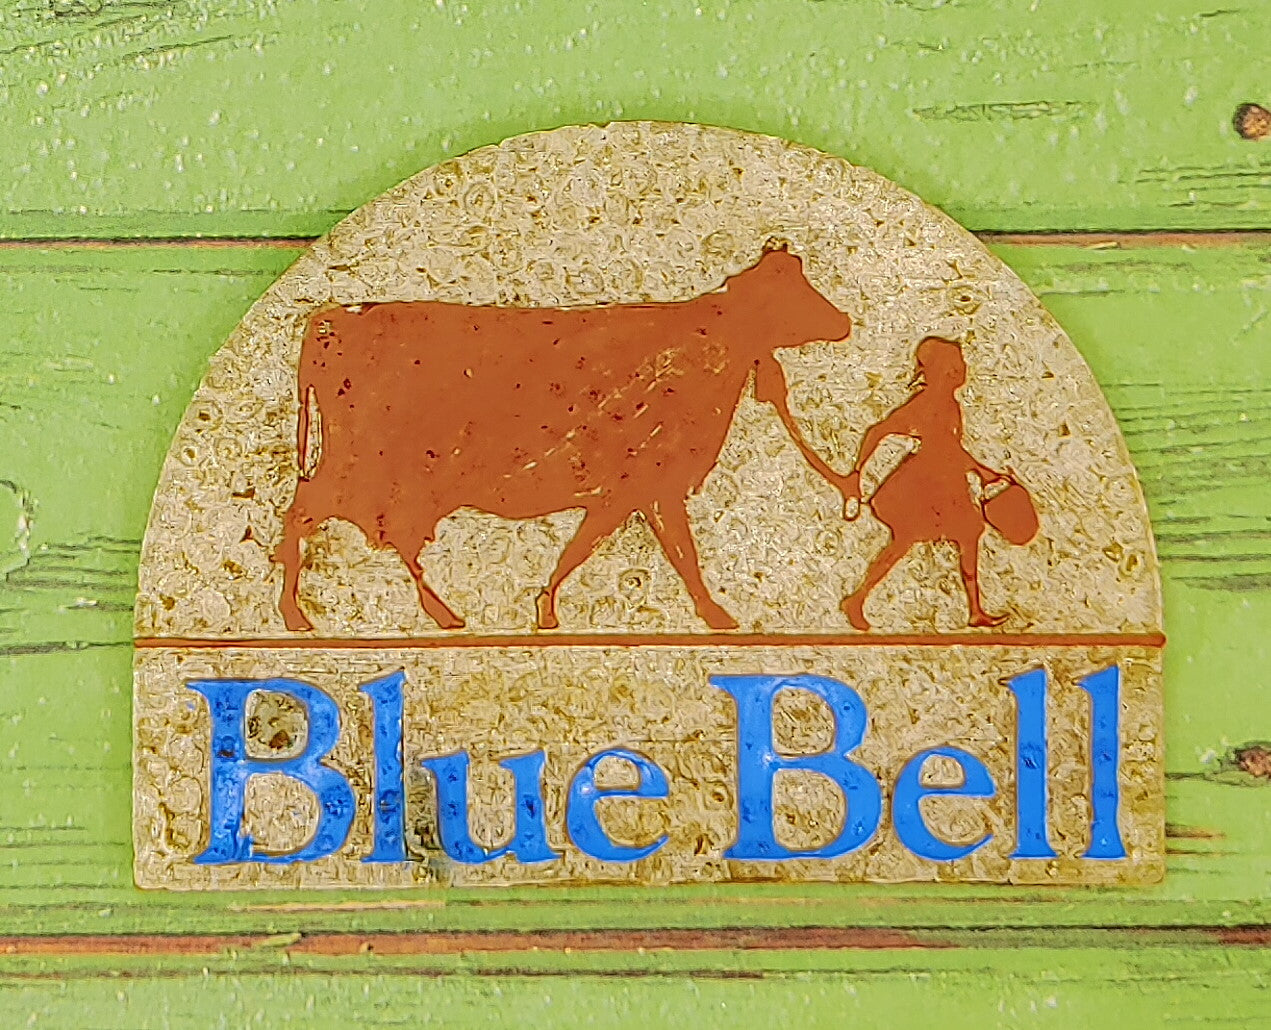 Bluebell Logo - Silicone Freshie Mold